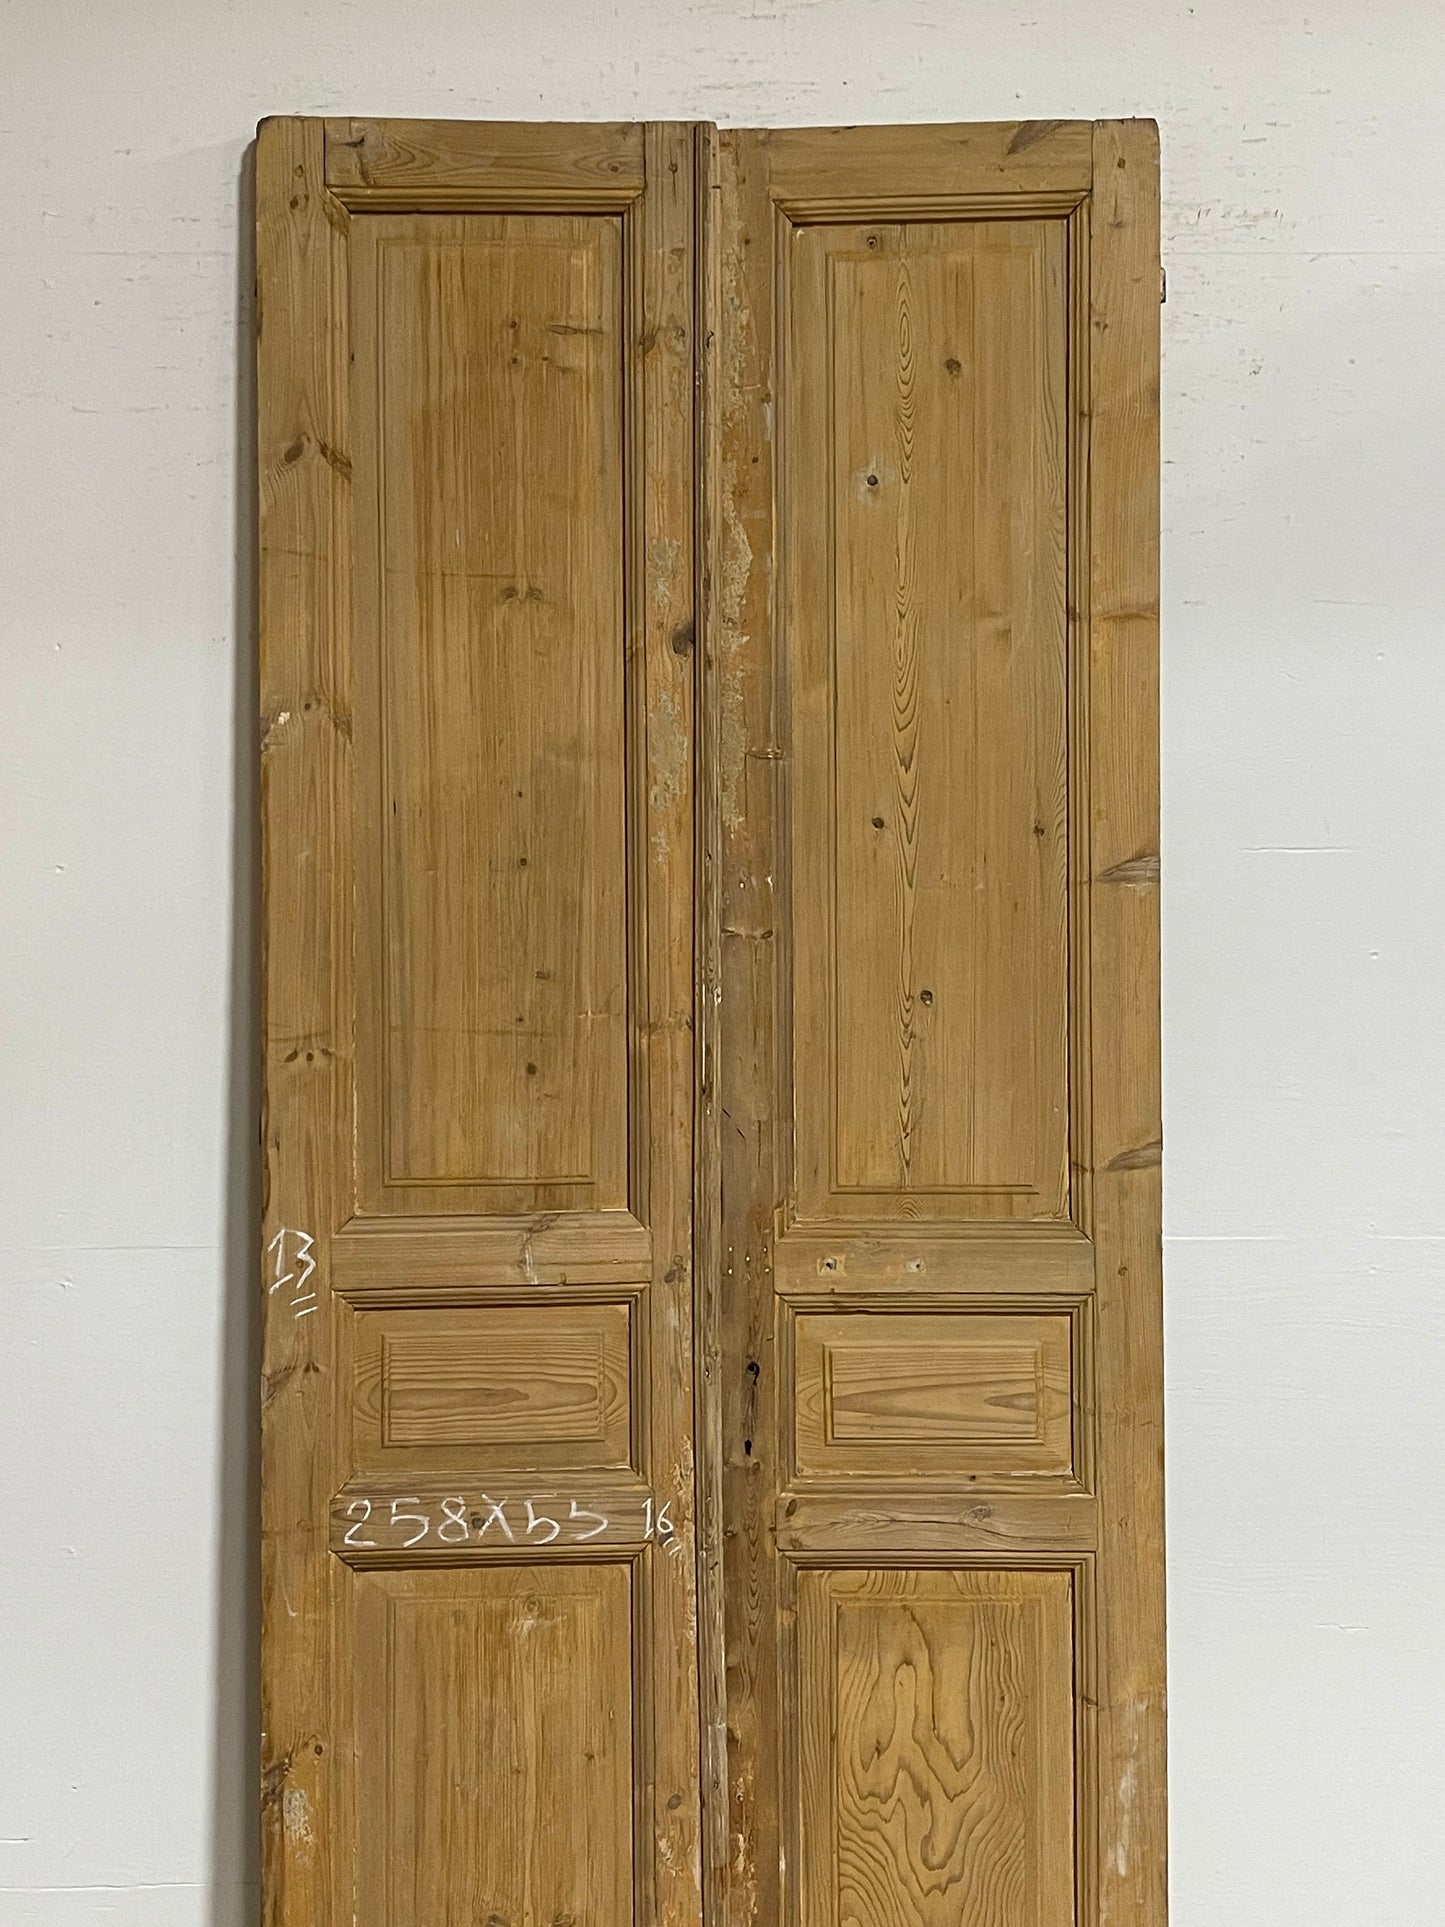 Antique French panel doors (101.75x42.75) G0149s